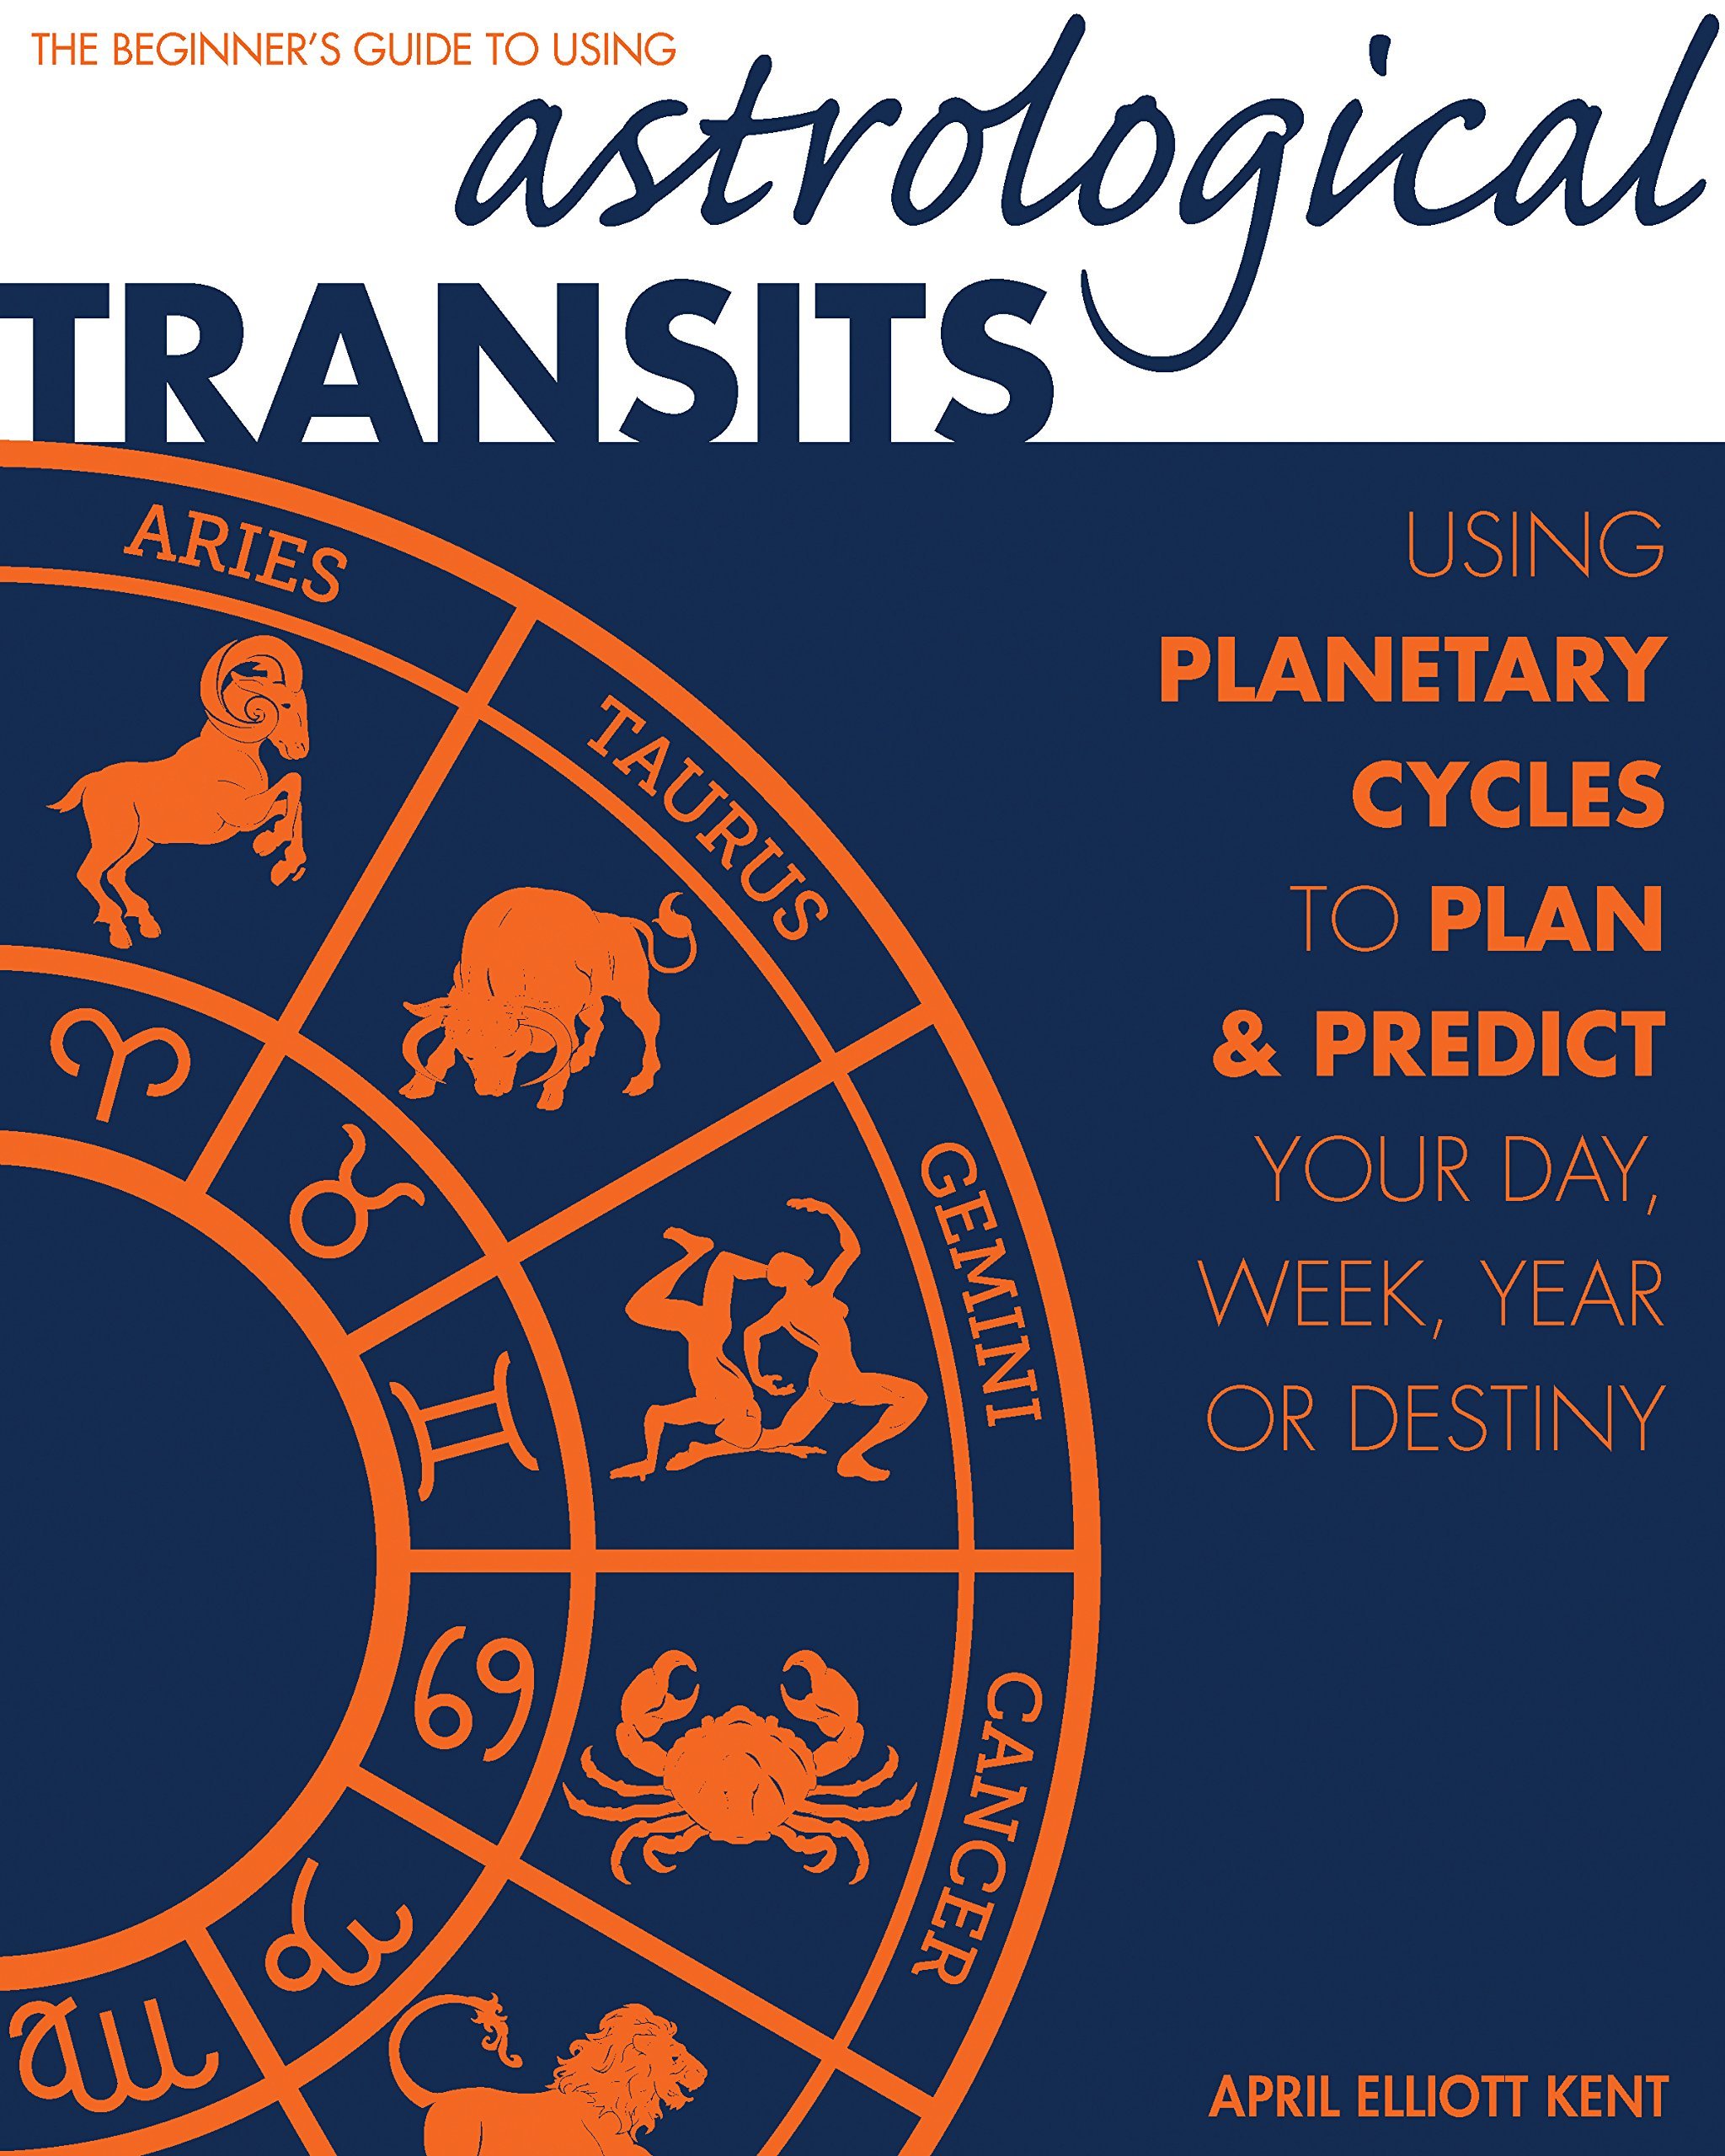 planetary transits 2018 vedic astrology